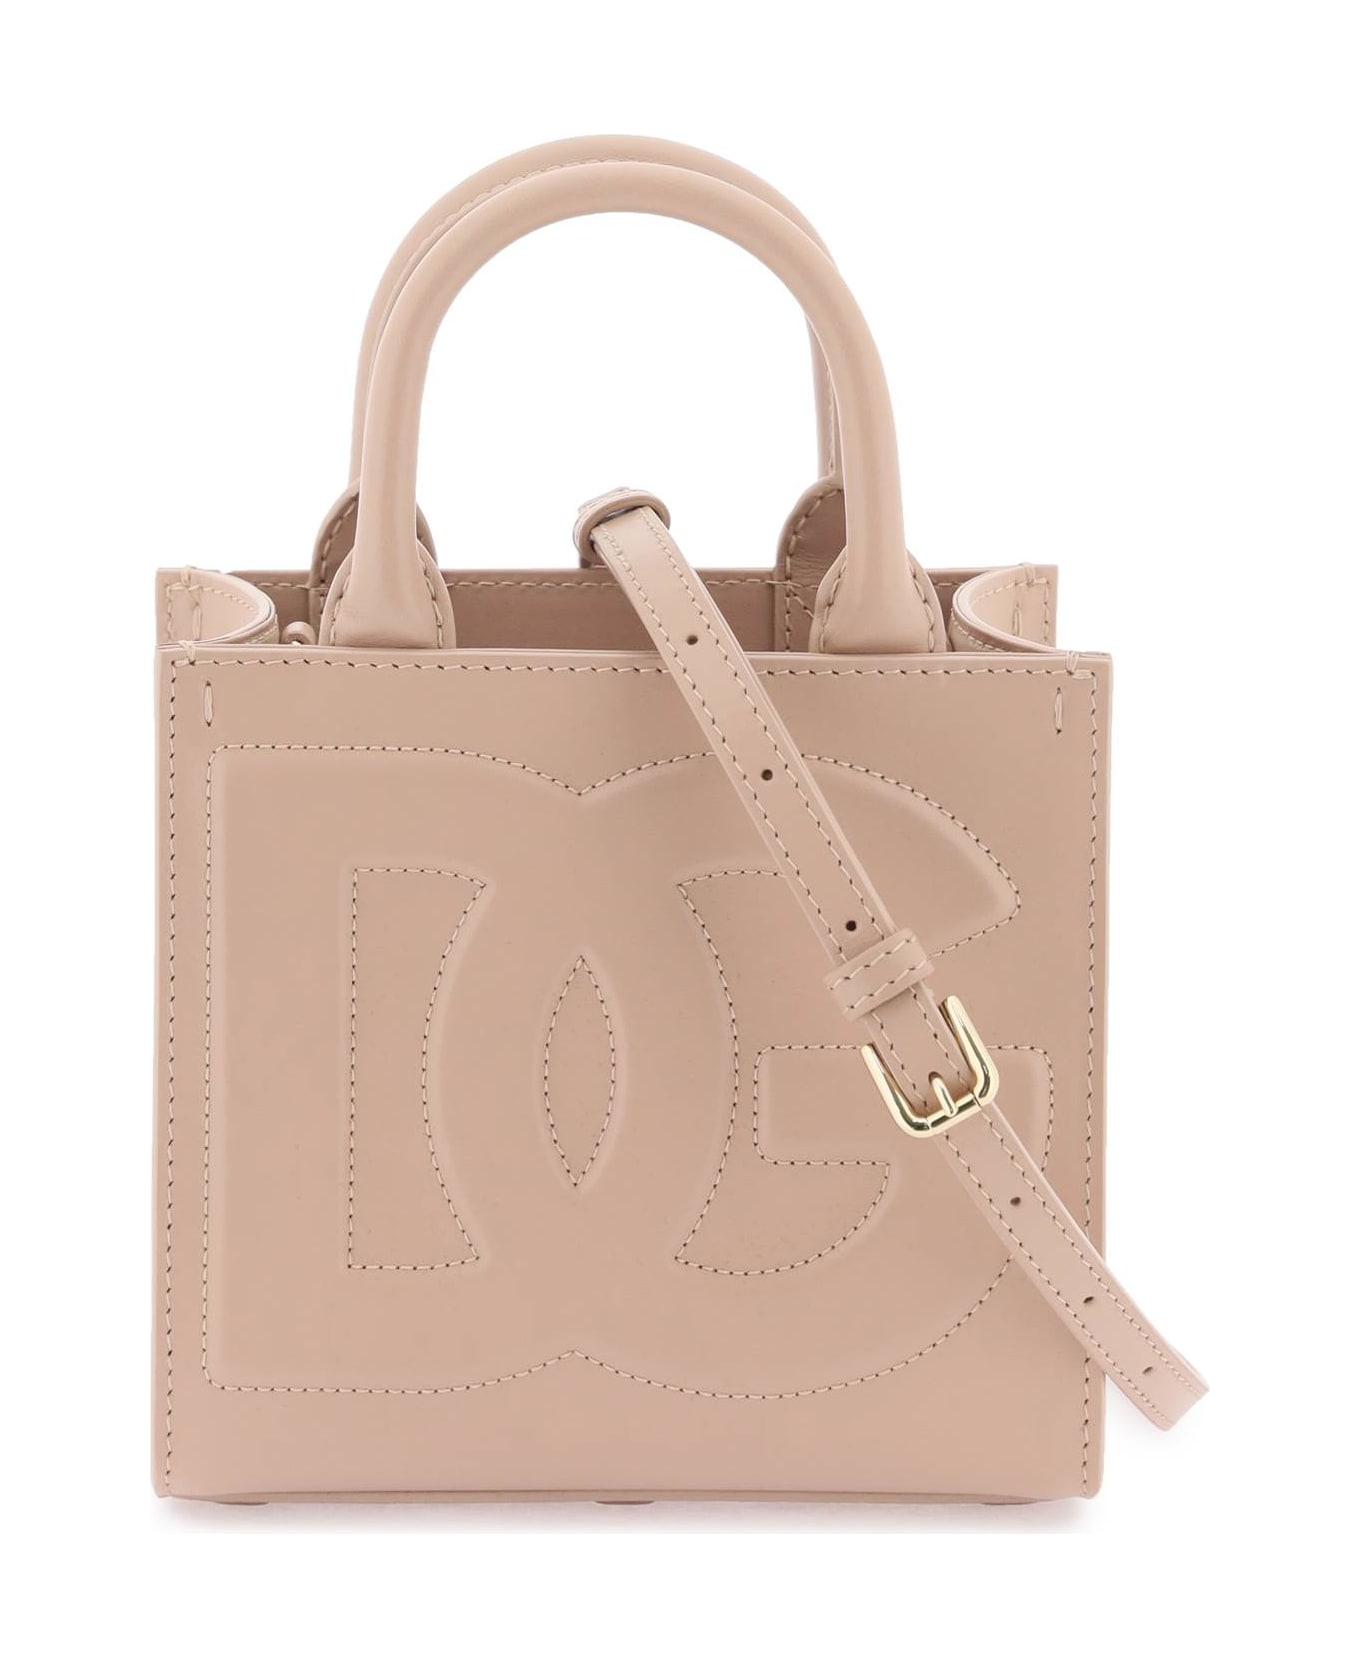 Dolce & Gabbana Dg Daily Tote Bag - Pale pink